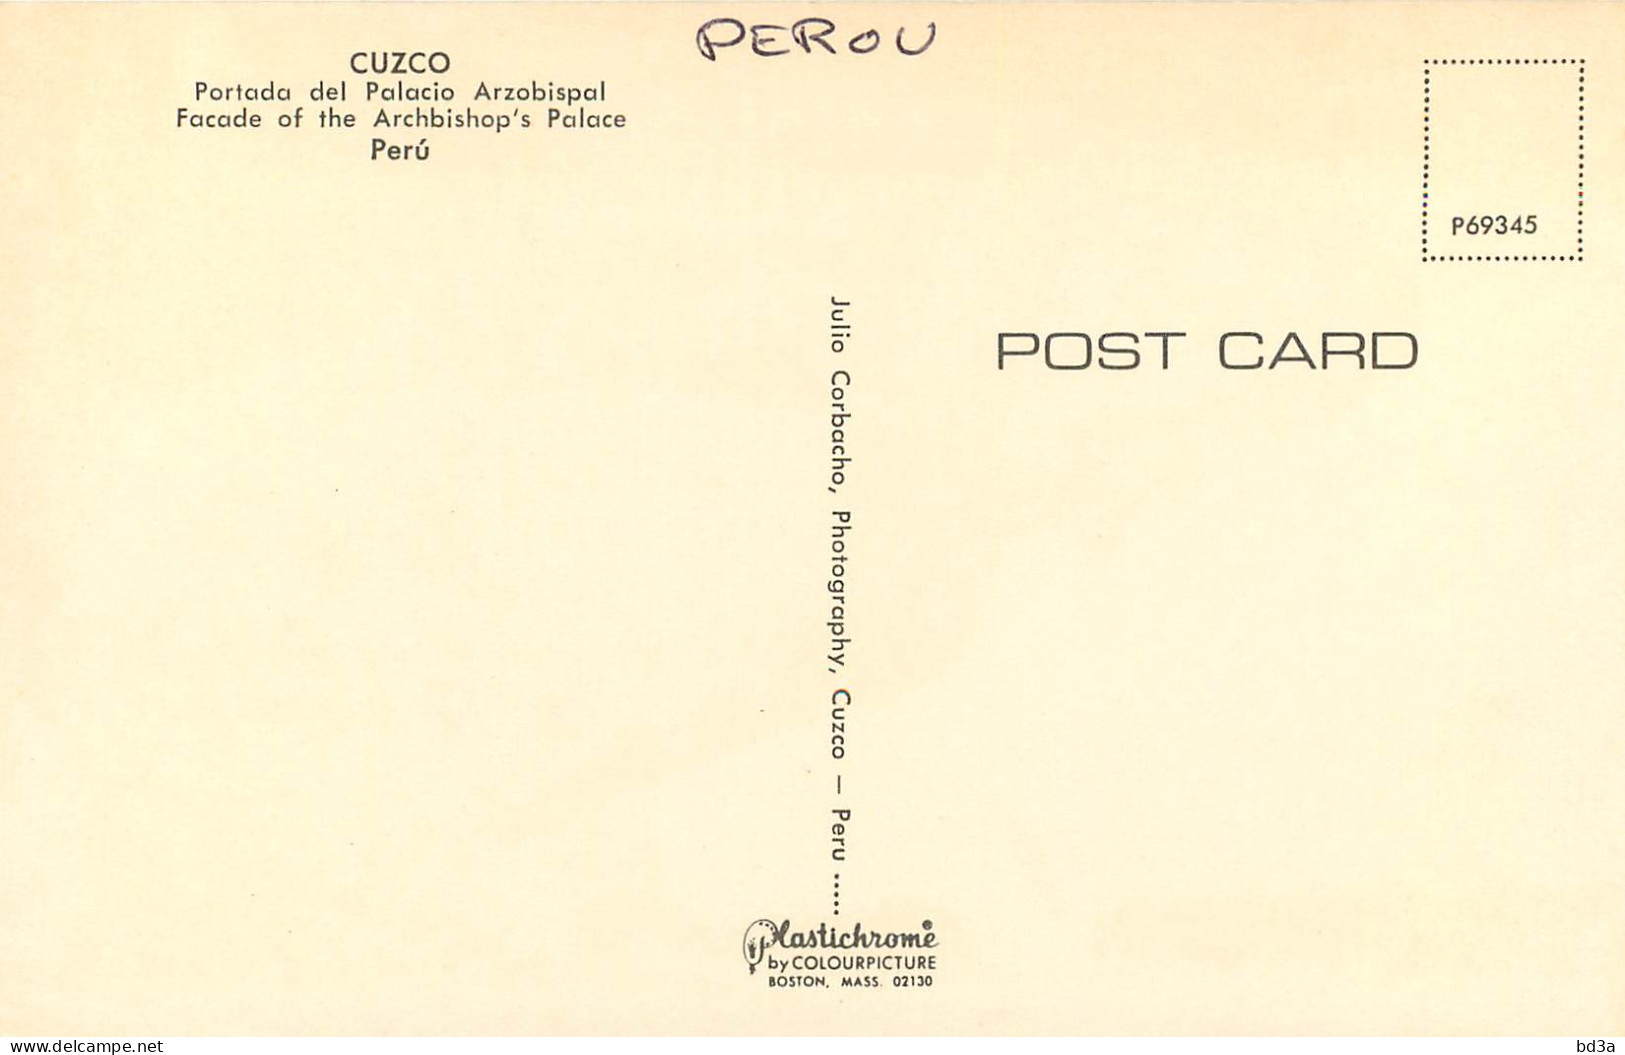 PEROU PERU CUZCO - Perú